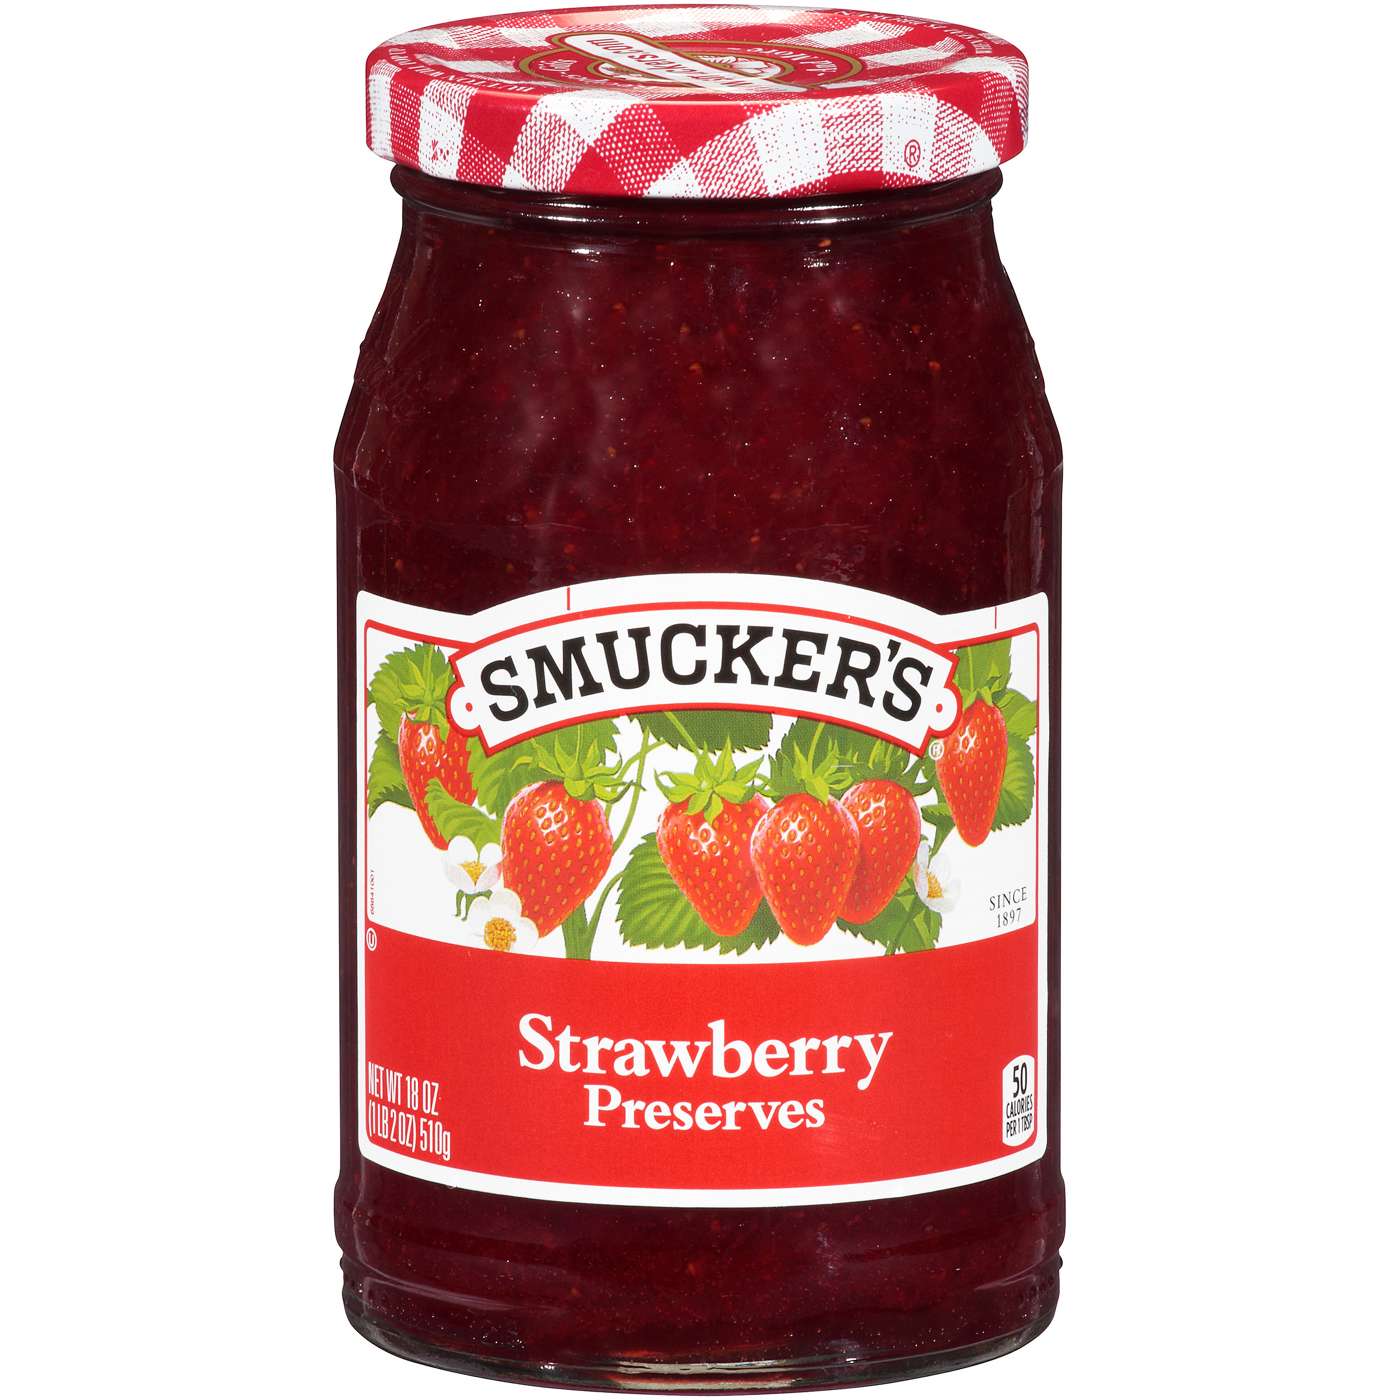 Smucker's Strawberry Preserves; image 1 of 2